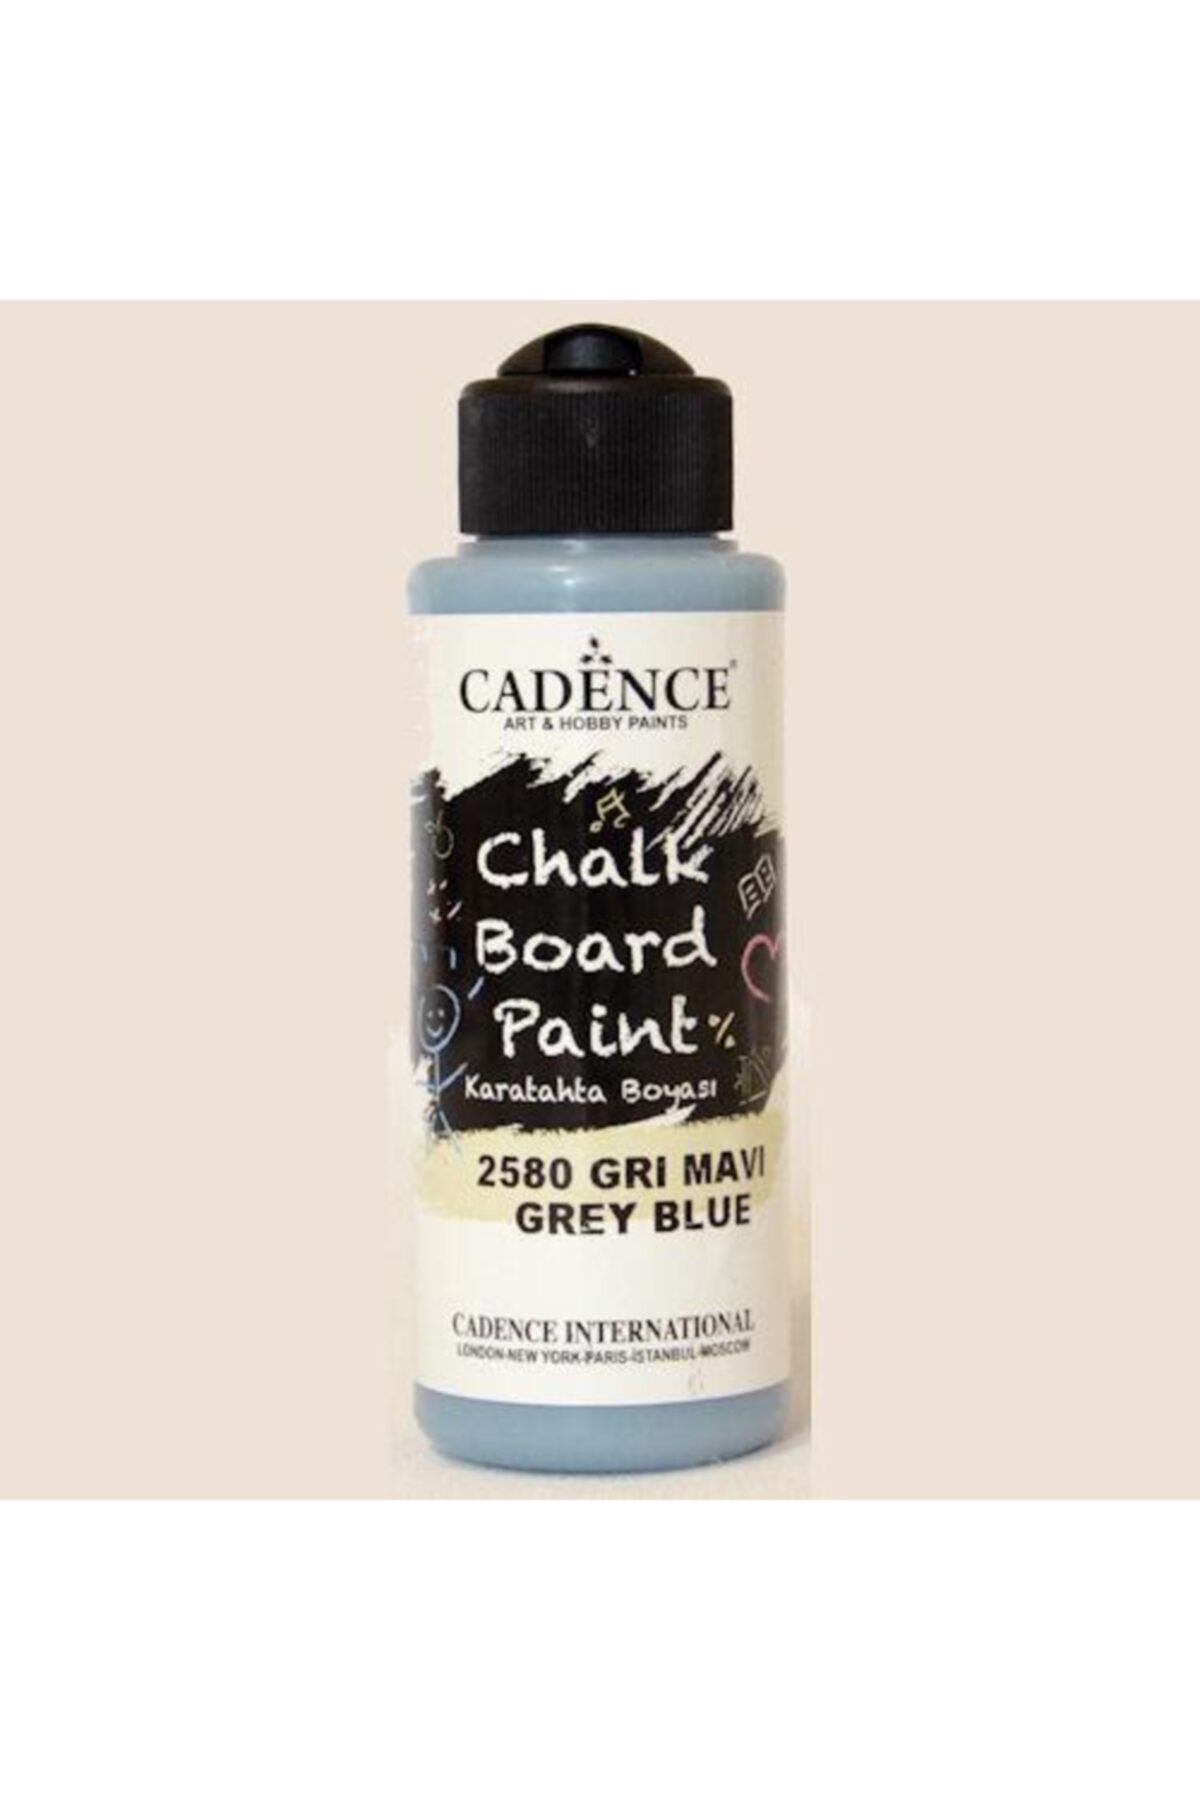 Cadence Chalkboard Paint 120ml Kara Tahta Boyası 2580 Gri Mavi